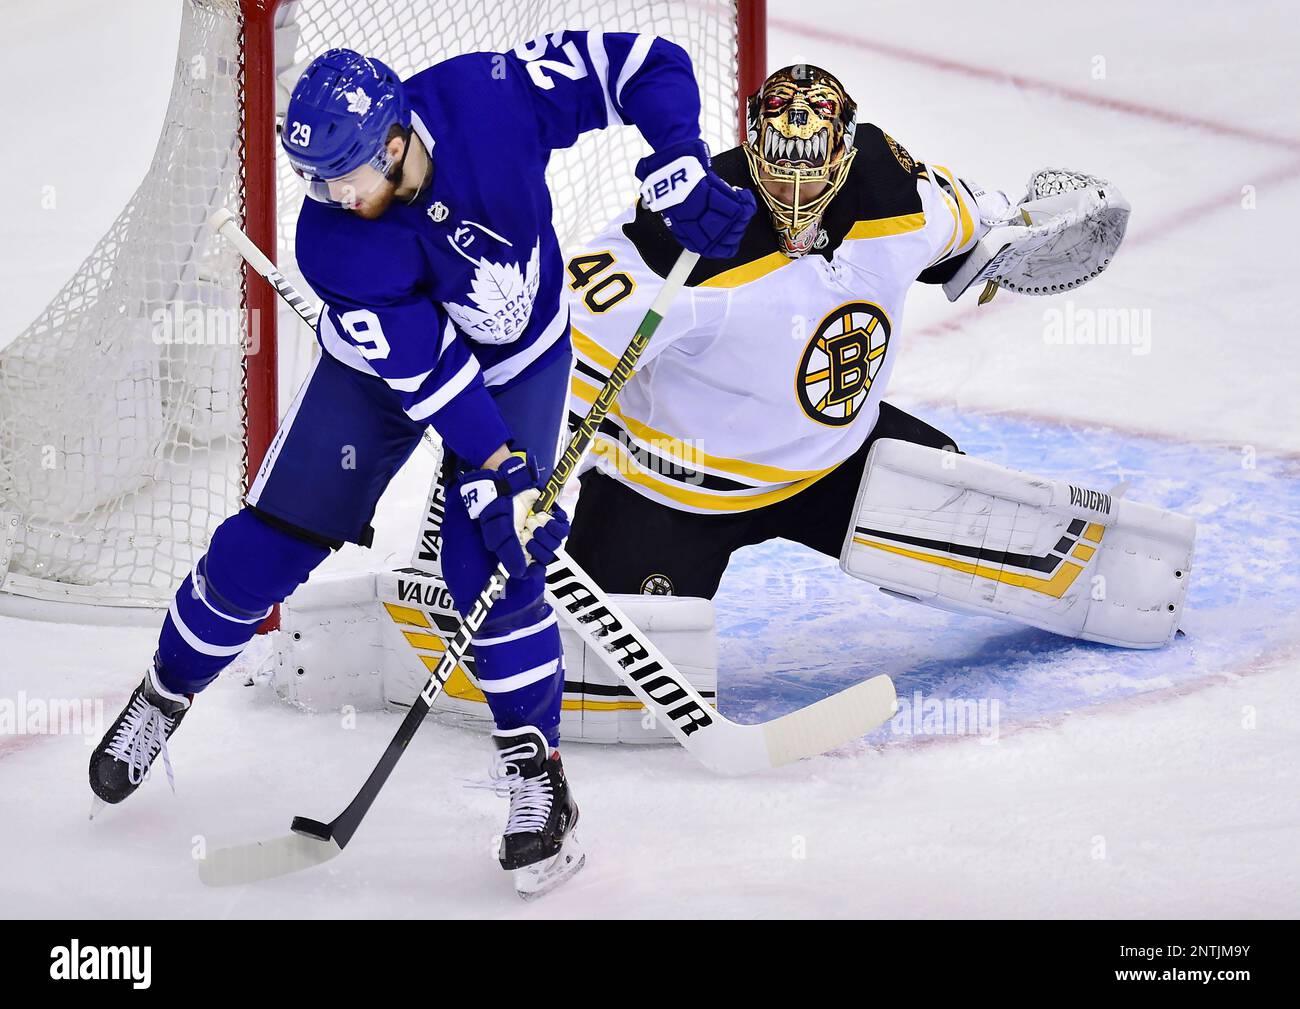 Download Canadian NHL Player William Nylander Stanley Cup Playoffs Wallpaper